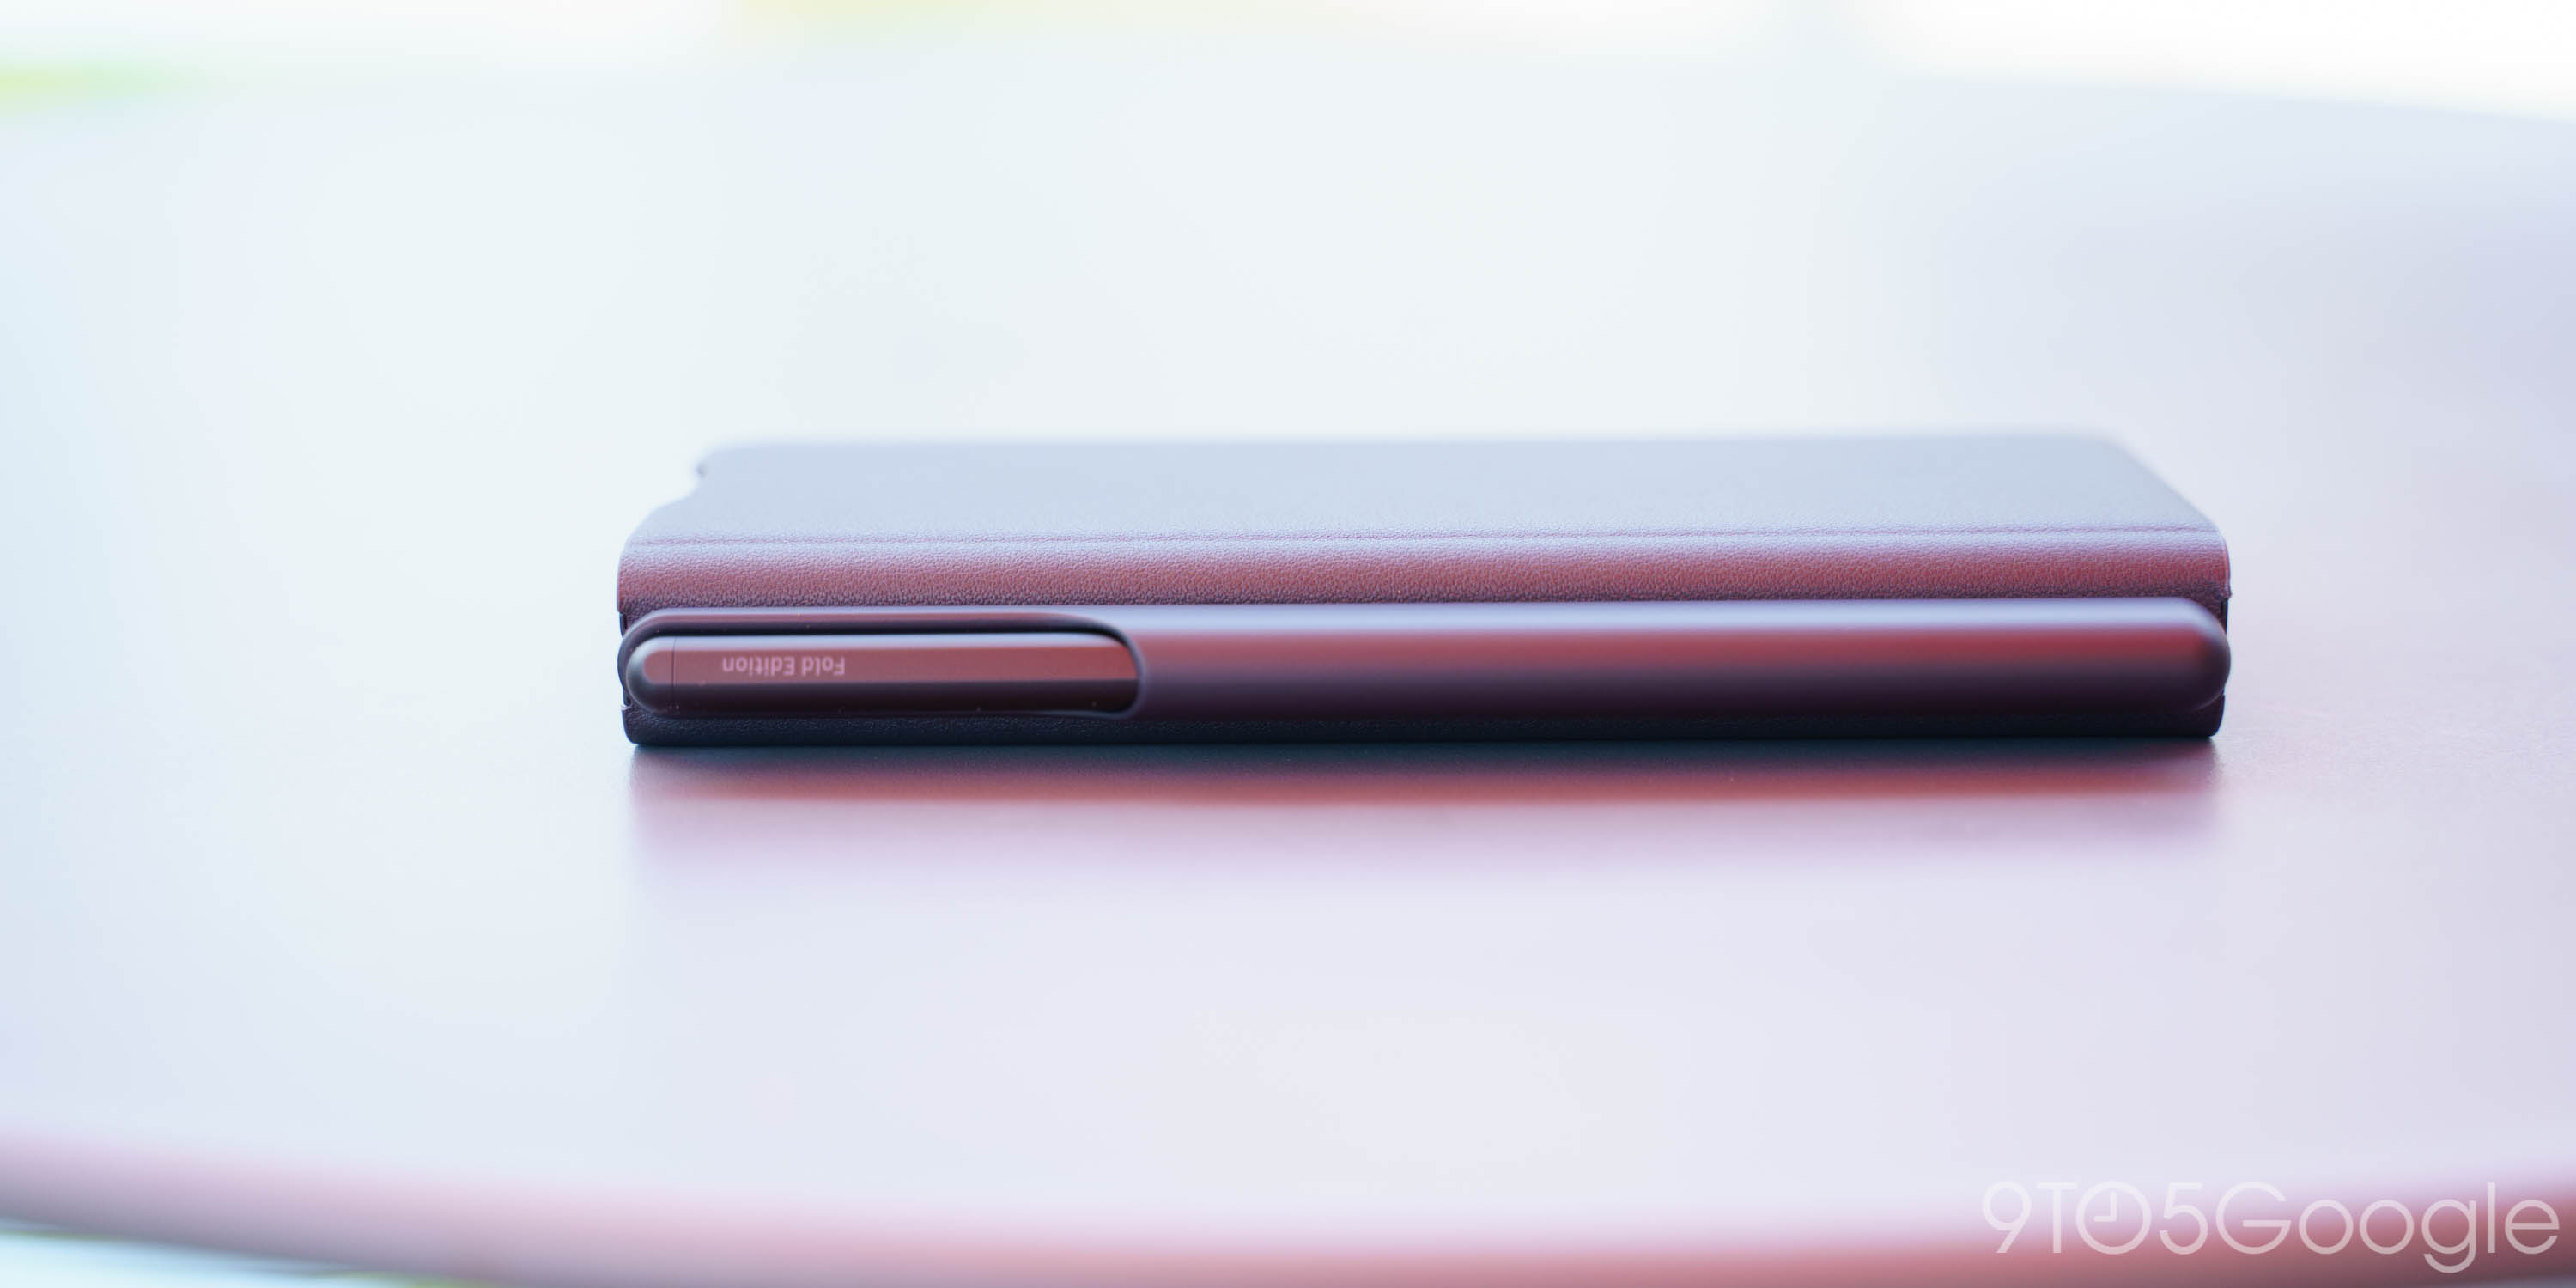 Galaxy Z Fold 3's S Pen case doesn't match Note's legacy - 9to5Google